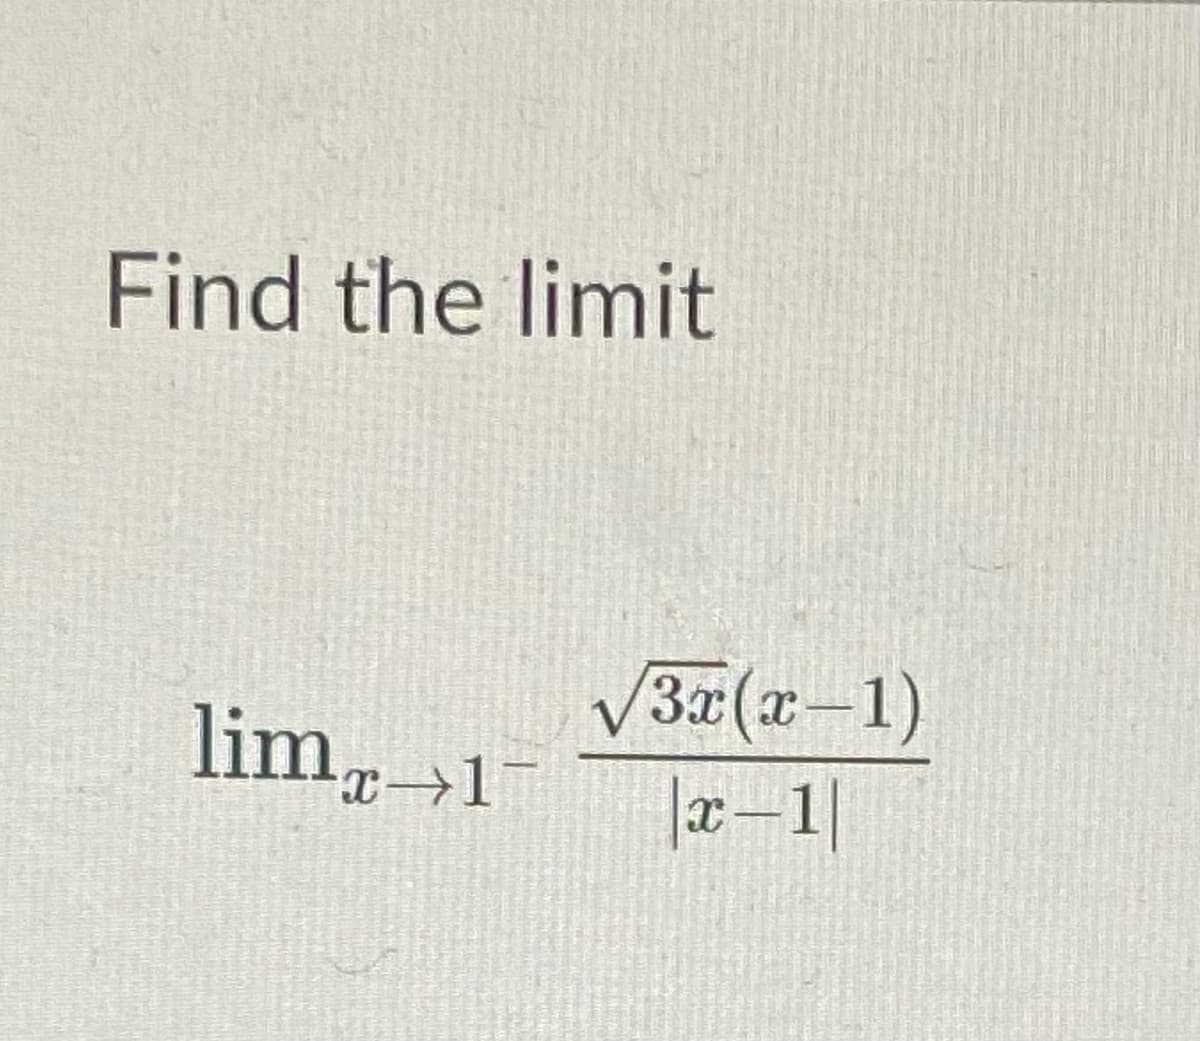 Find the limit
3x(x-1)
lim→1
|x-1|
